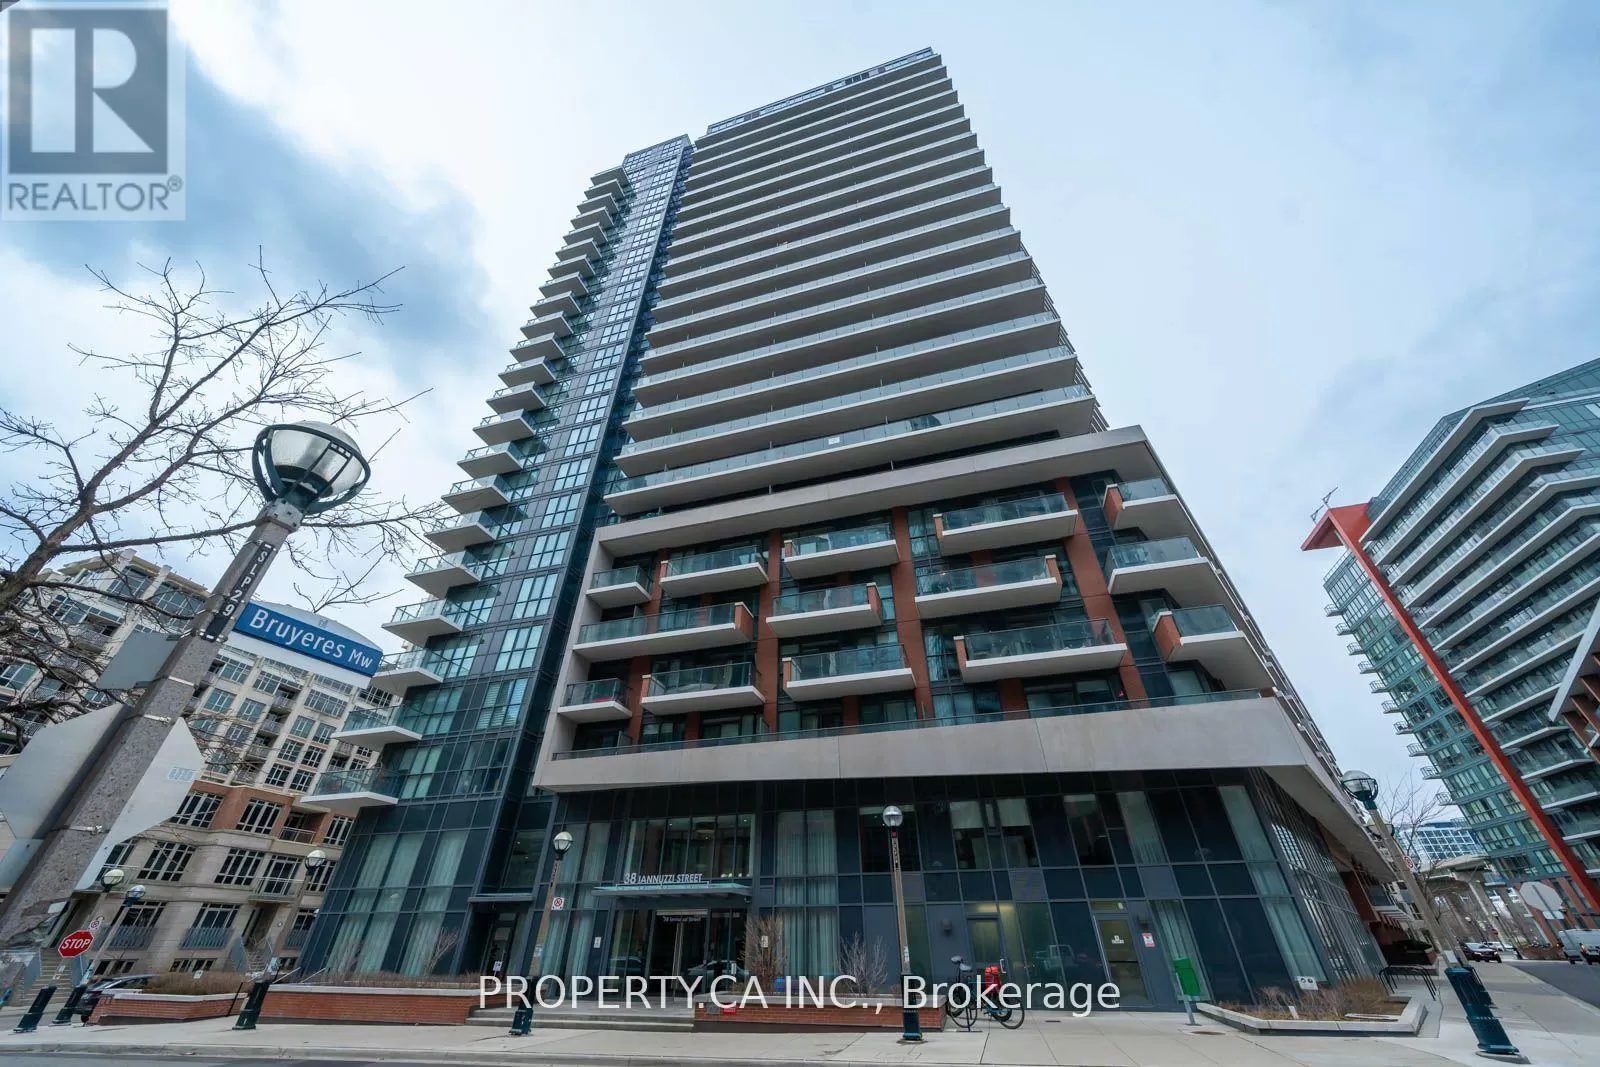 Apartment for rent: 641 - 38 Iannuzzi Street, Toronto, Ontario M5V 0S2